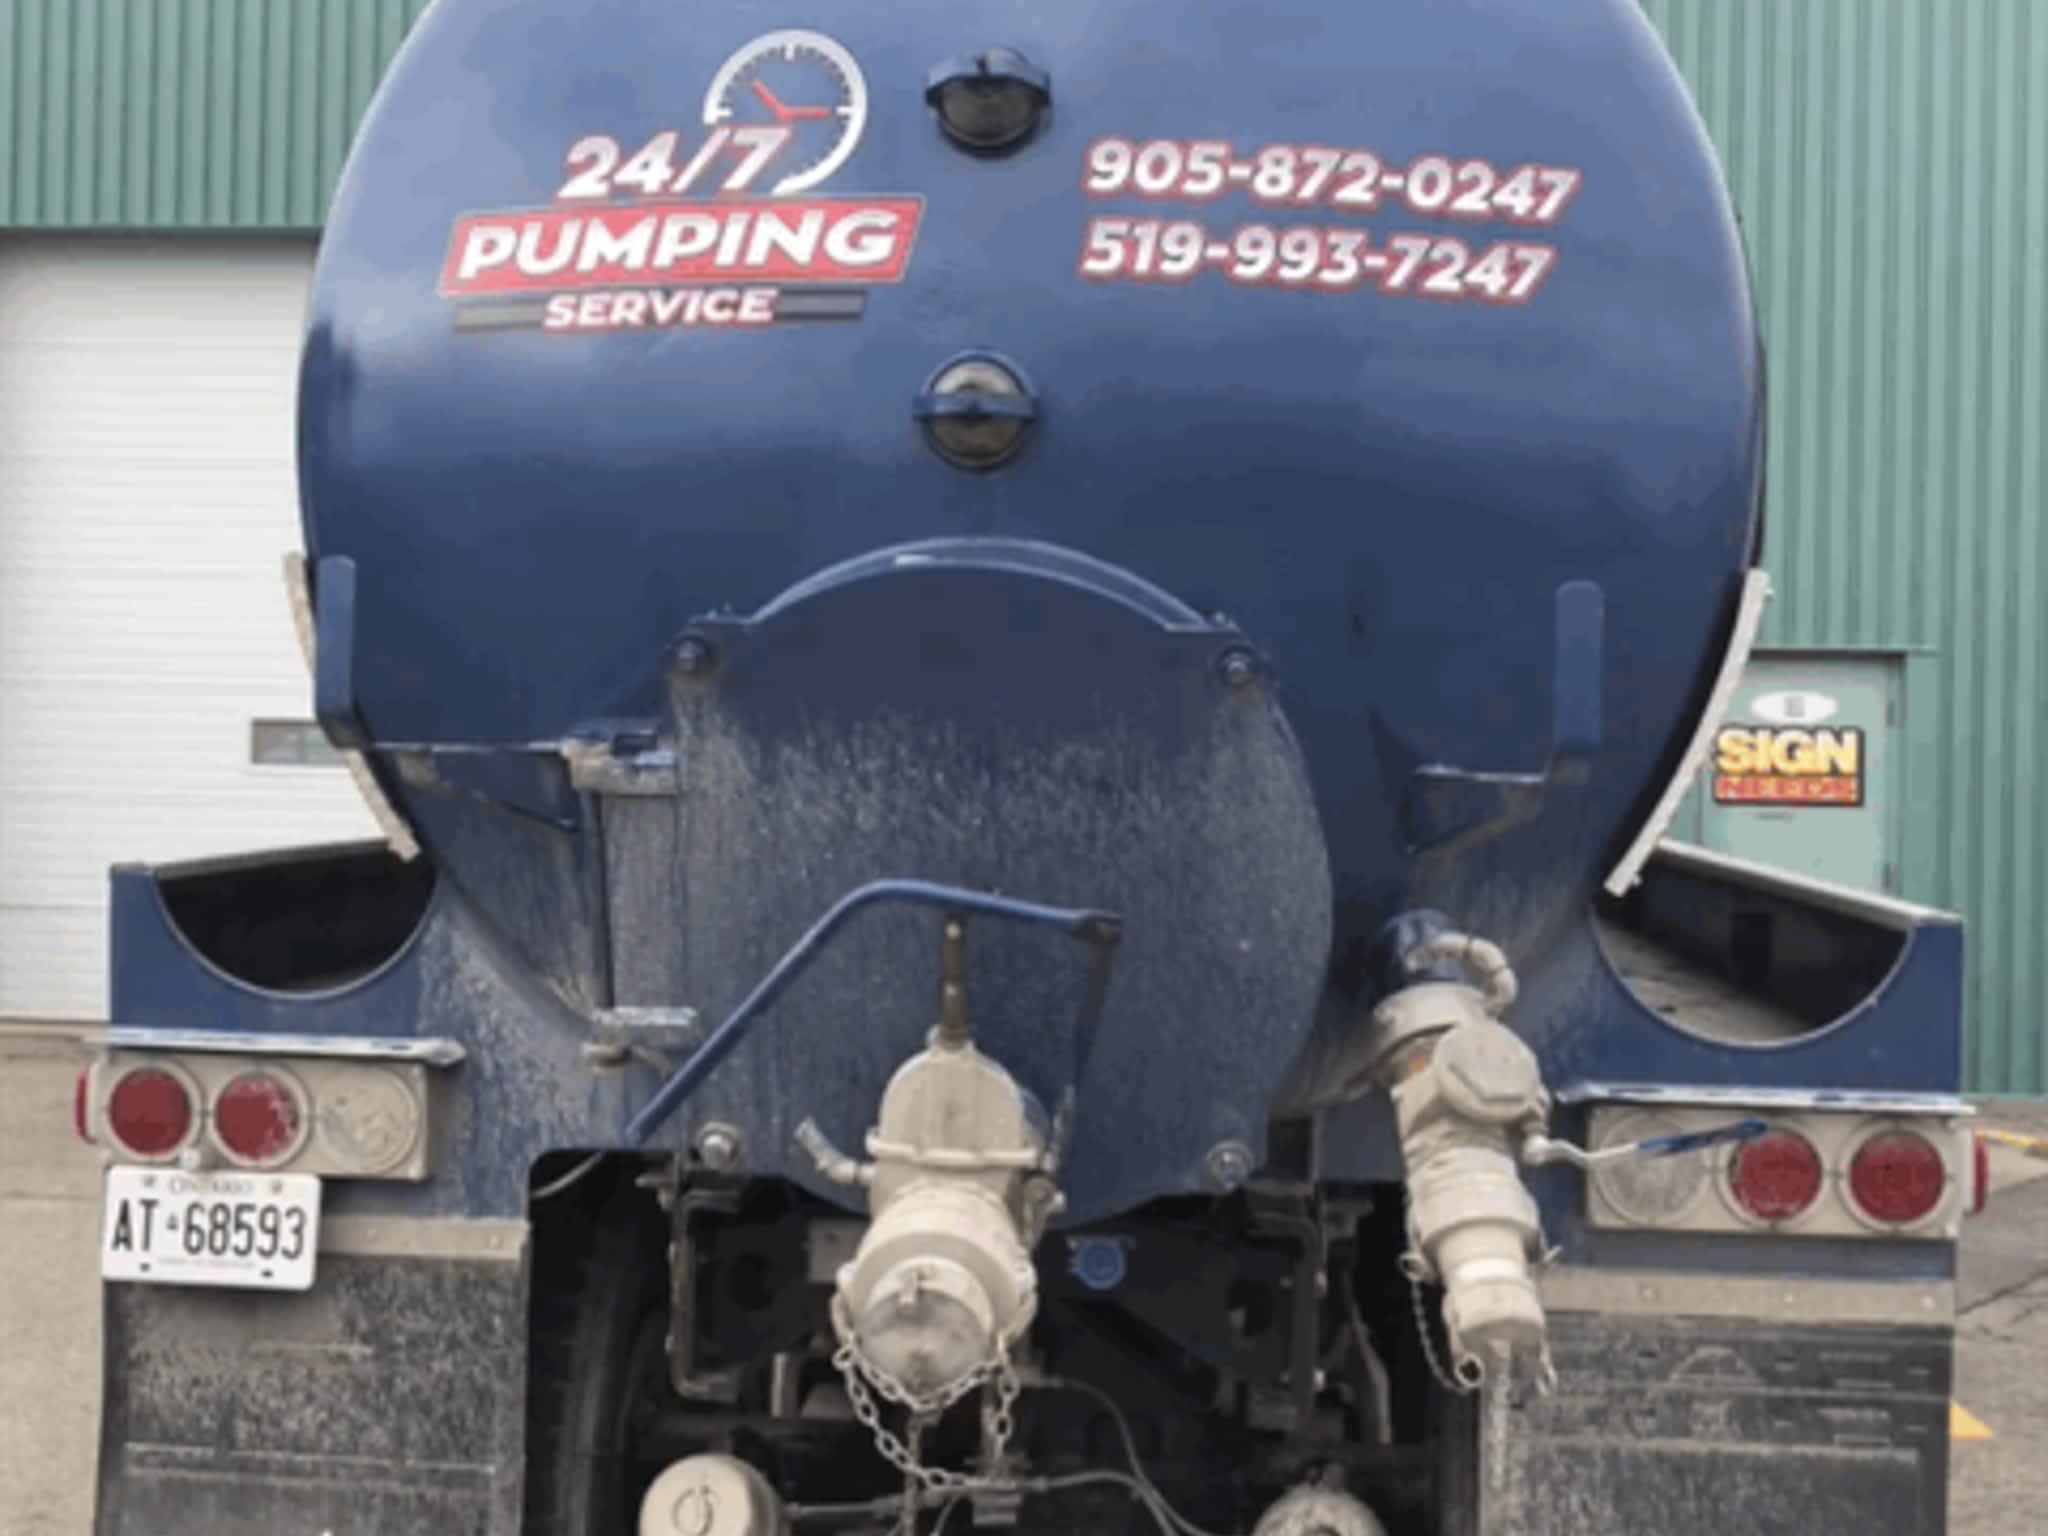 photo 24-7 Pumping Service